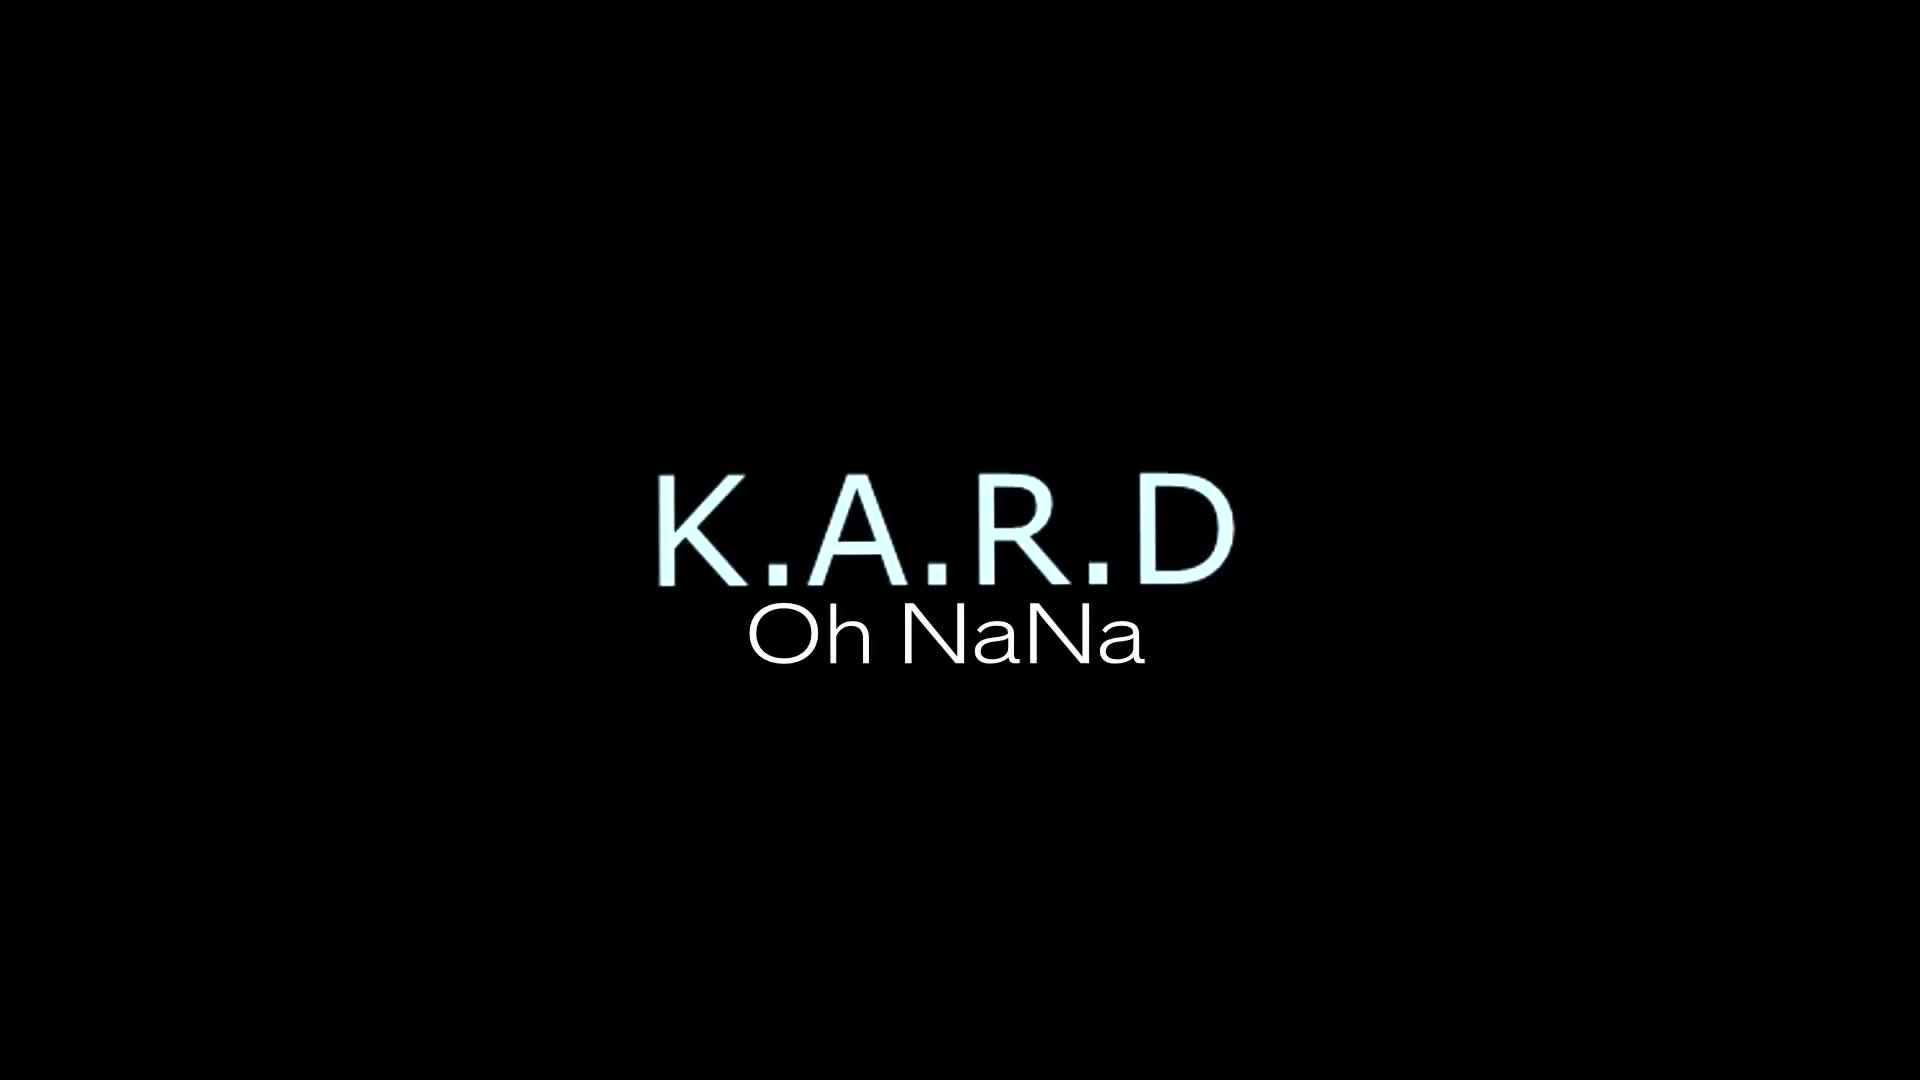 K.A.R.D – Oh NaNa (카드) 오나나 WAVEYA cover dance